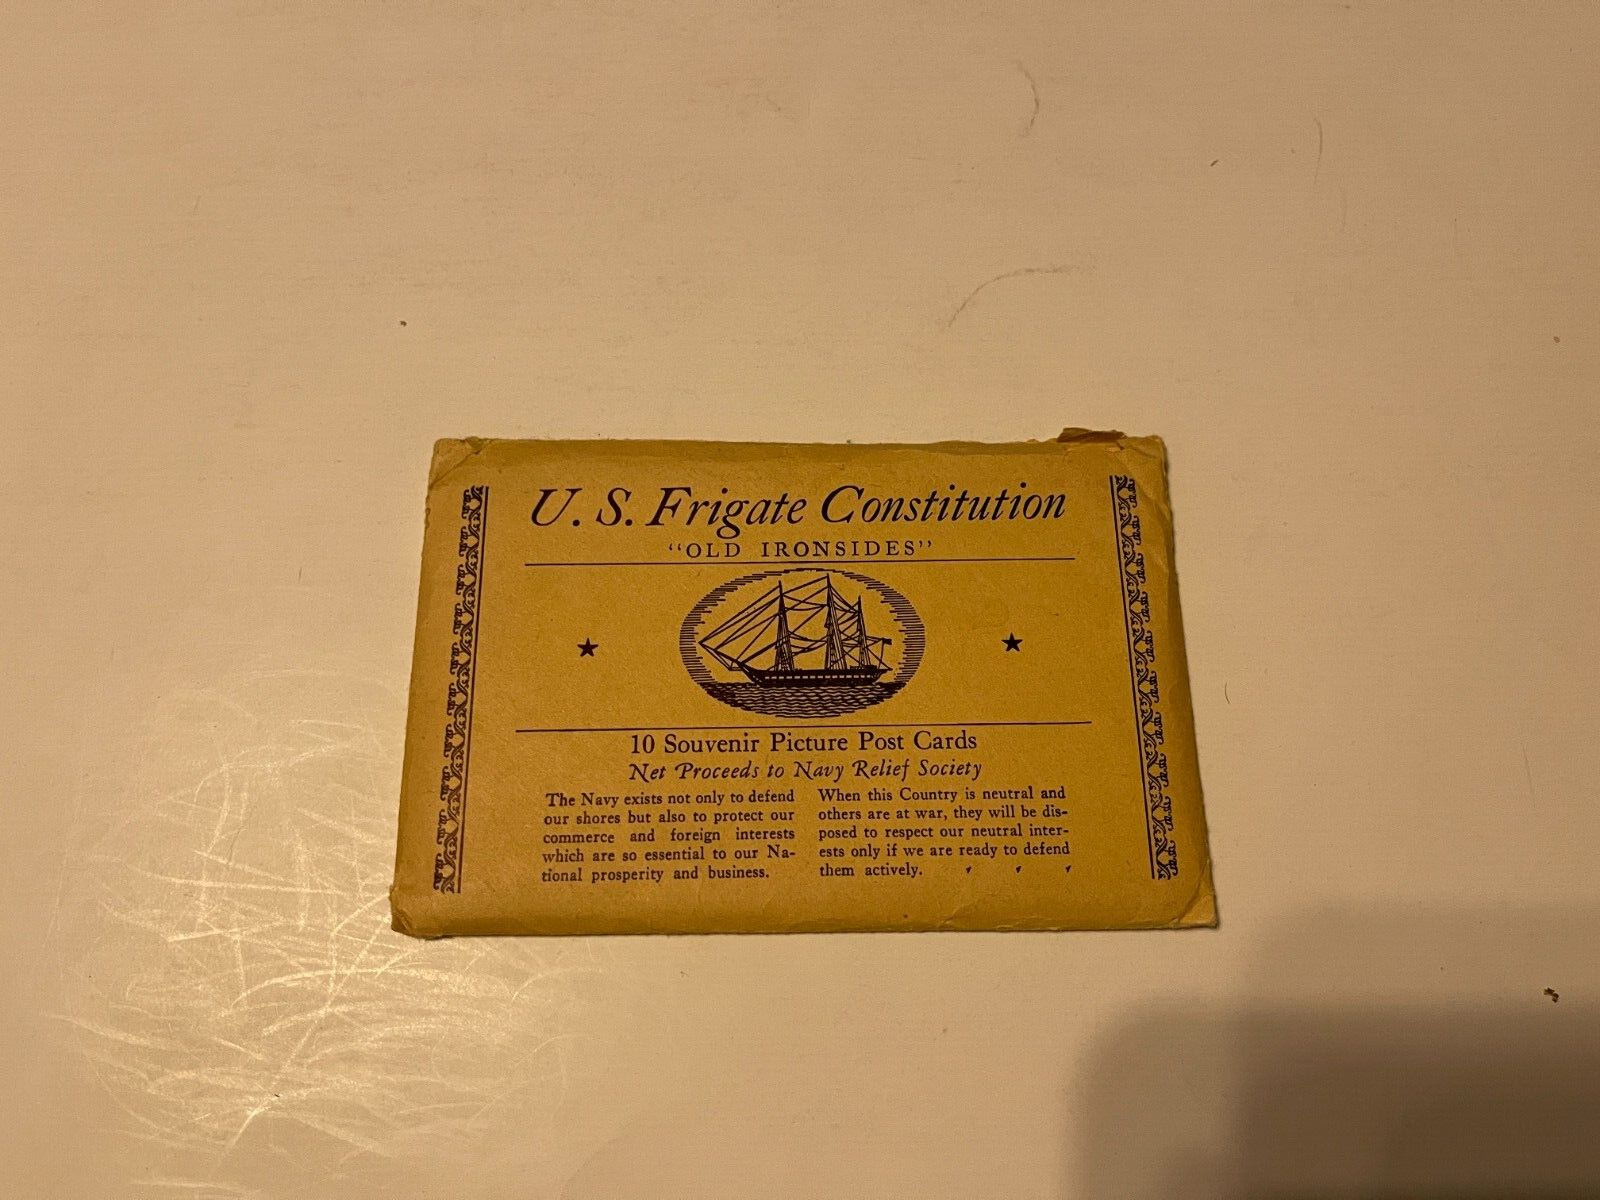 10 Vintage U.S. Frigate Constitution Linen Postcards - All Unused old ironsides-